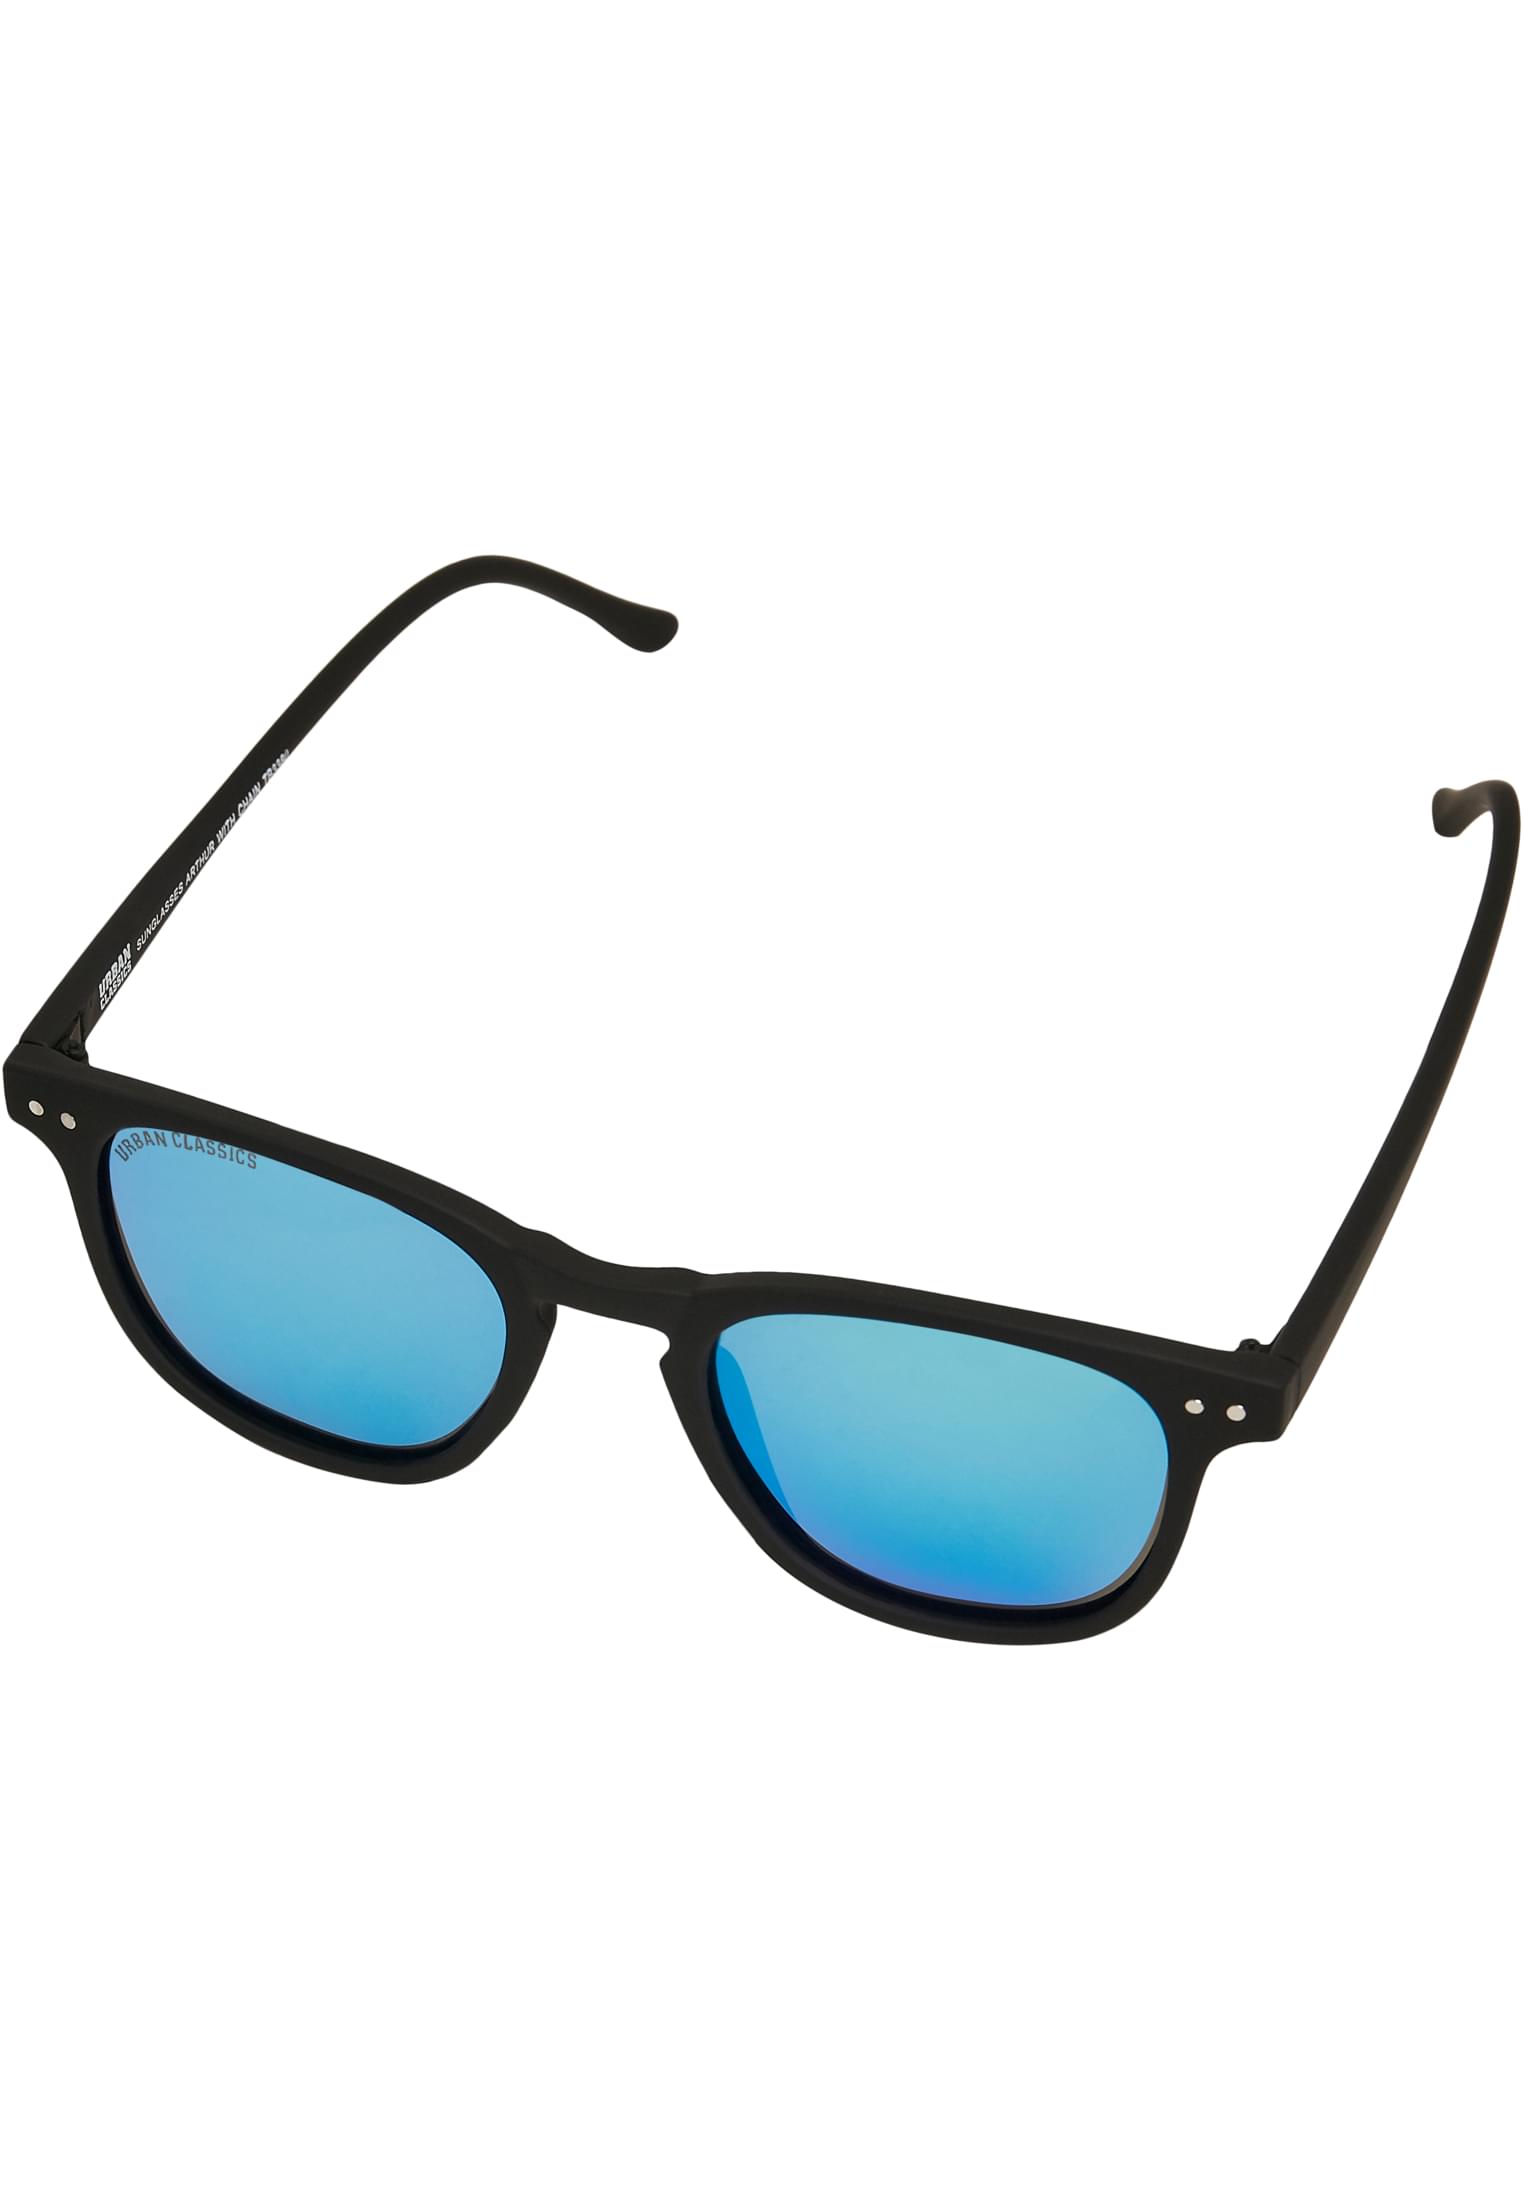 Arthur Sunglasses with Chain-TB3380